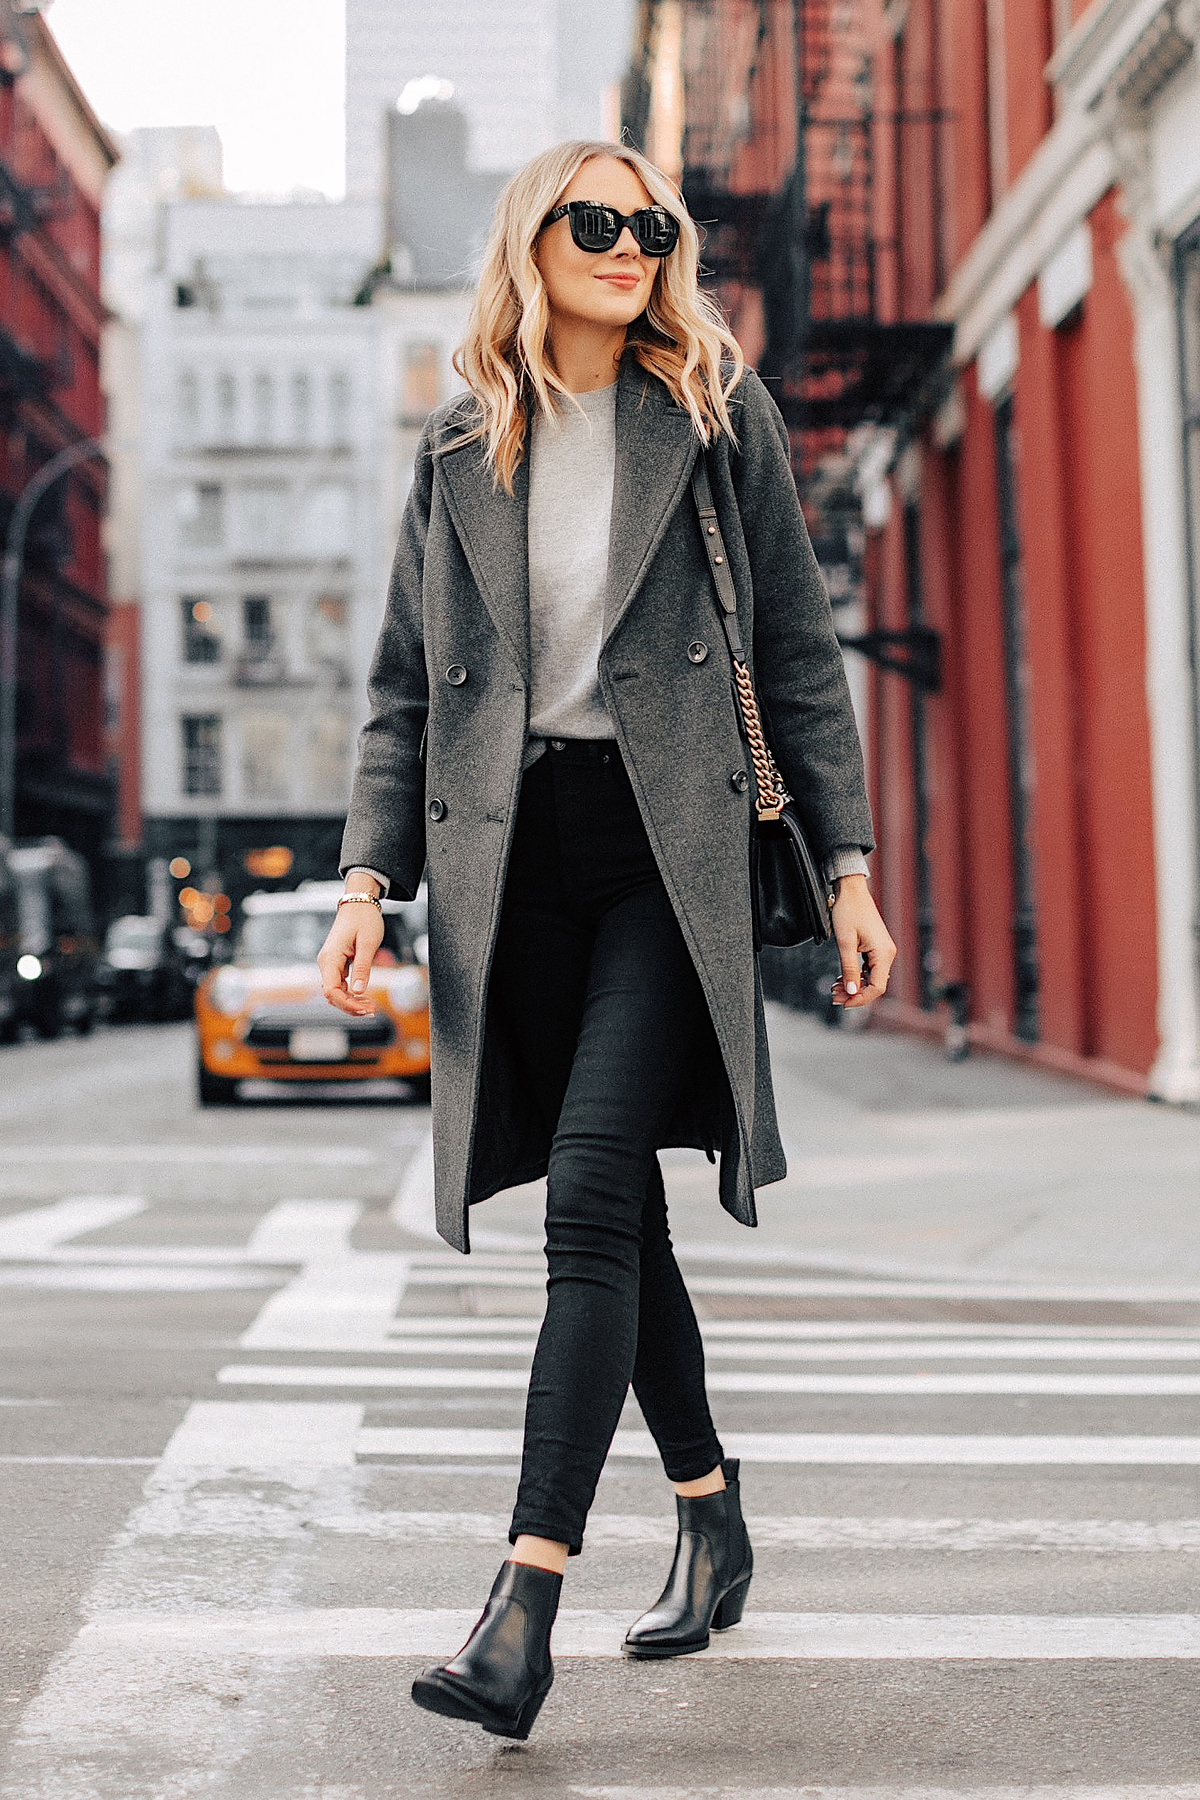 Fashion Jackson Wearing Grey Everlane Wool Overcoat Grey Sweater Black Skinny Jeans Black Booties New York City Street Style